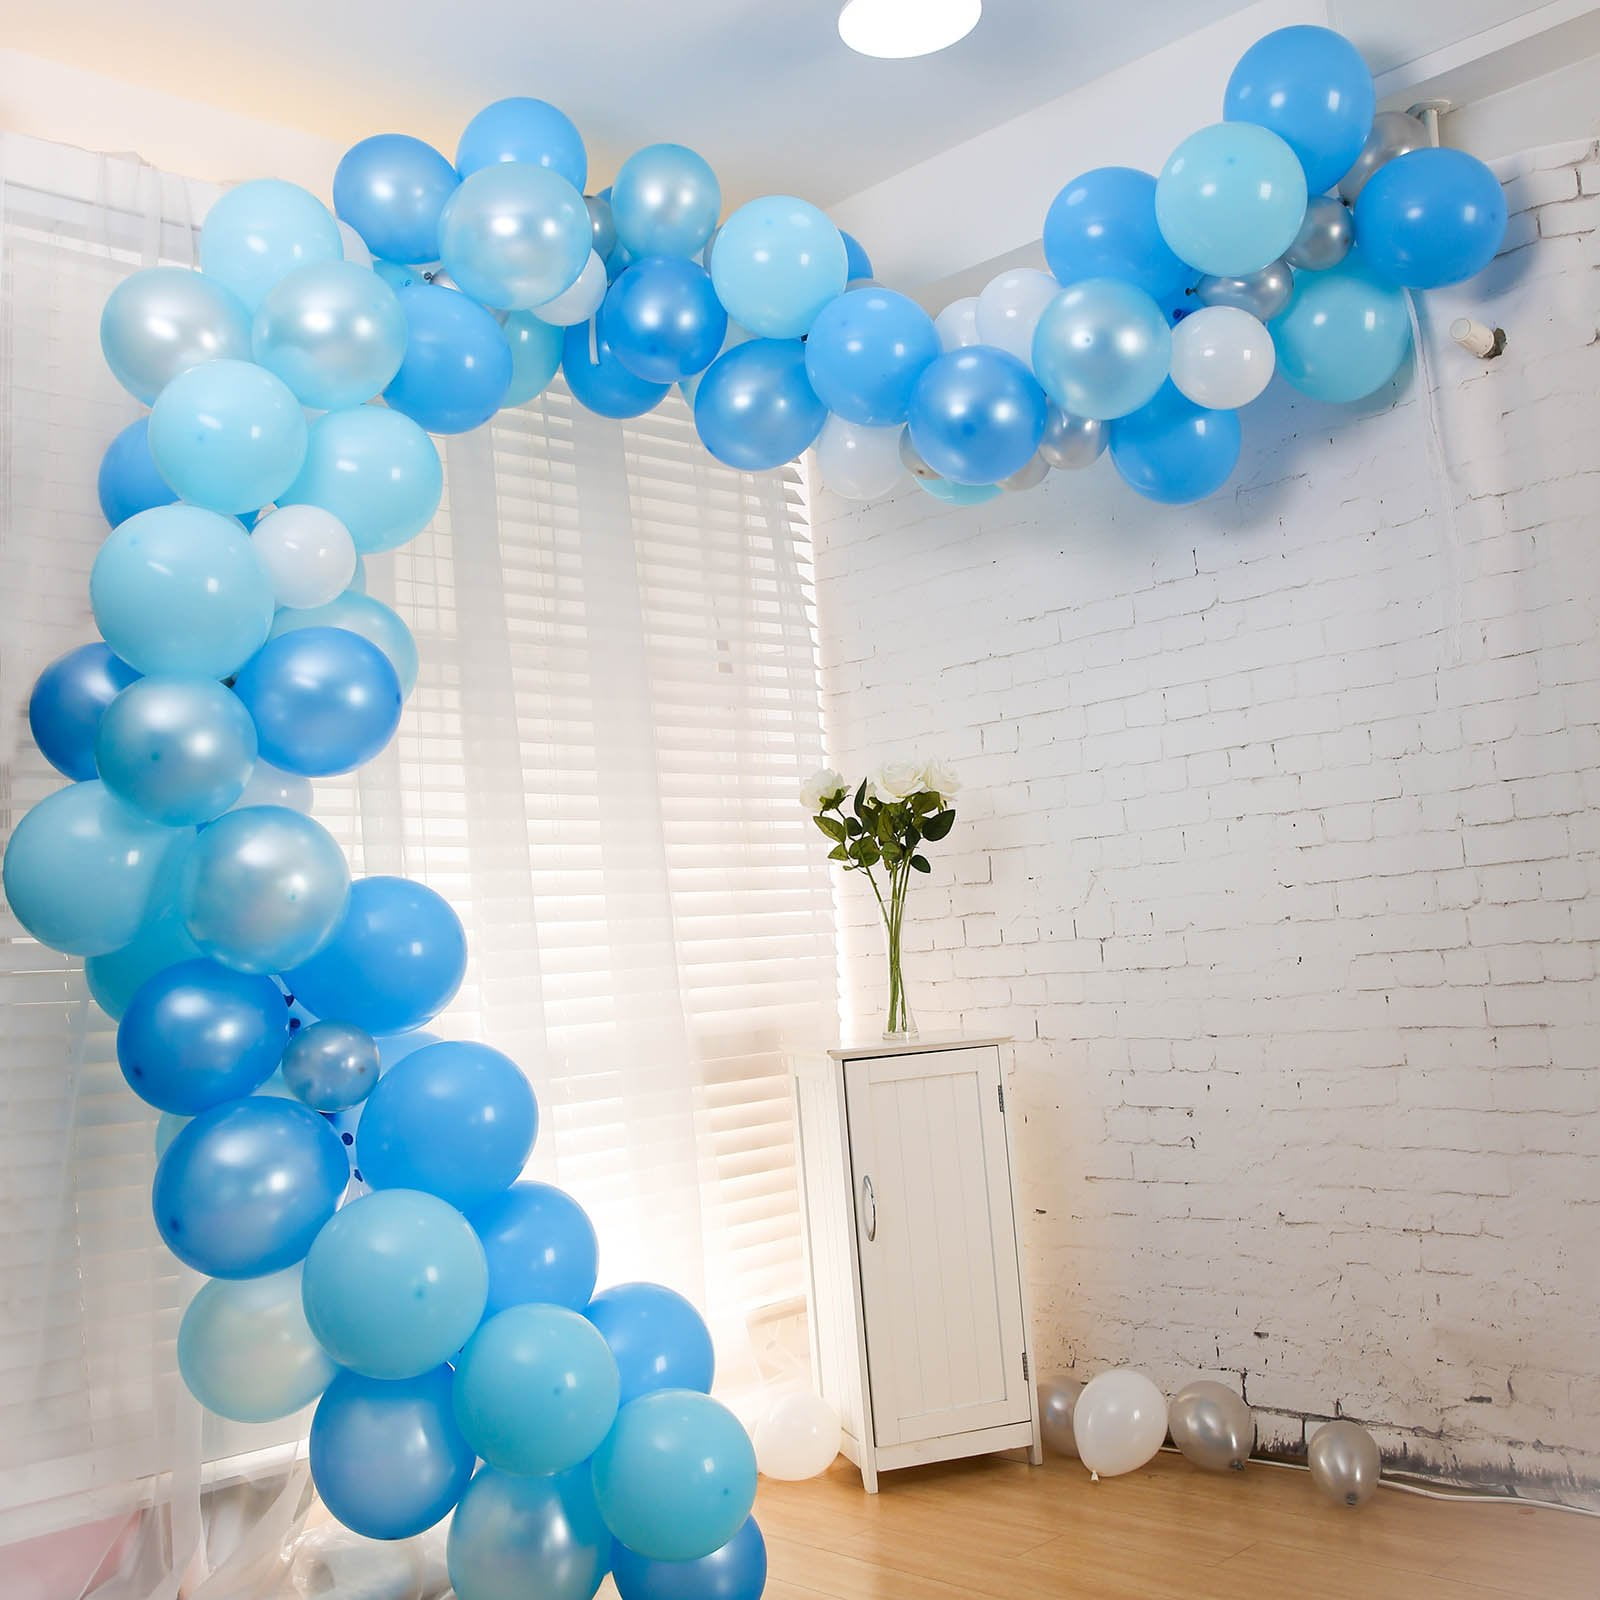 4-easy-balloon-decoration-ideas